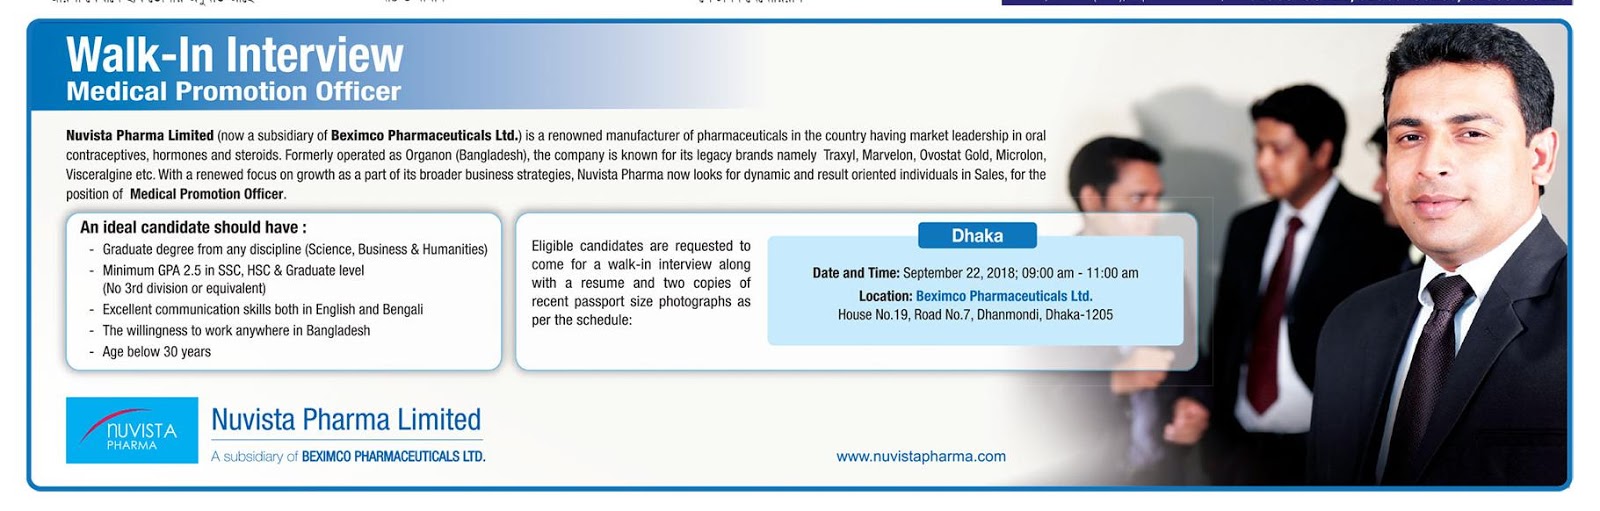 Nuvista Pharma Ltd. Medical Promotion Officer Job Circular 2018